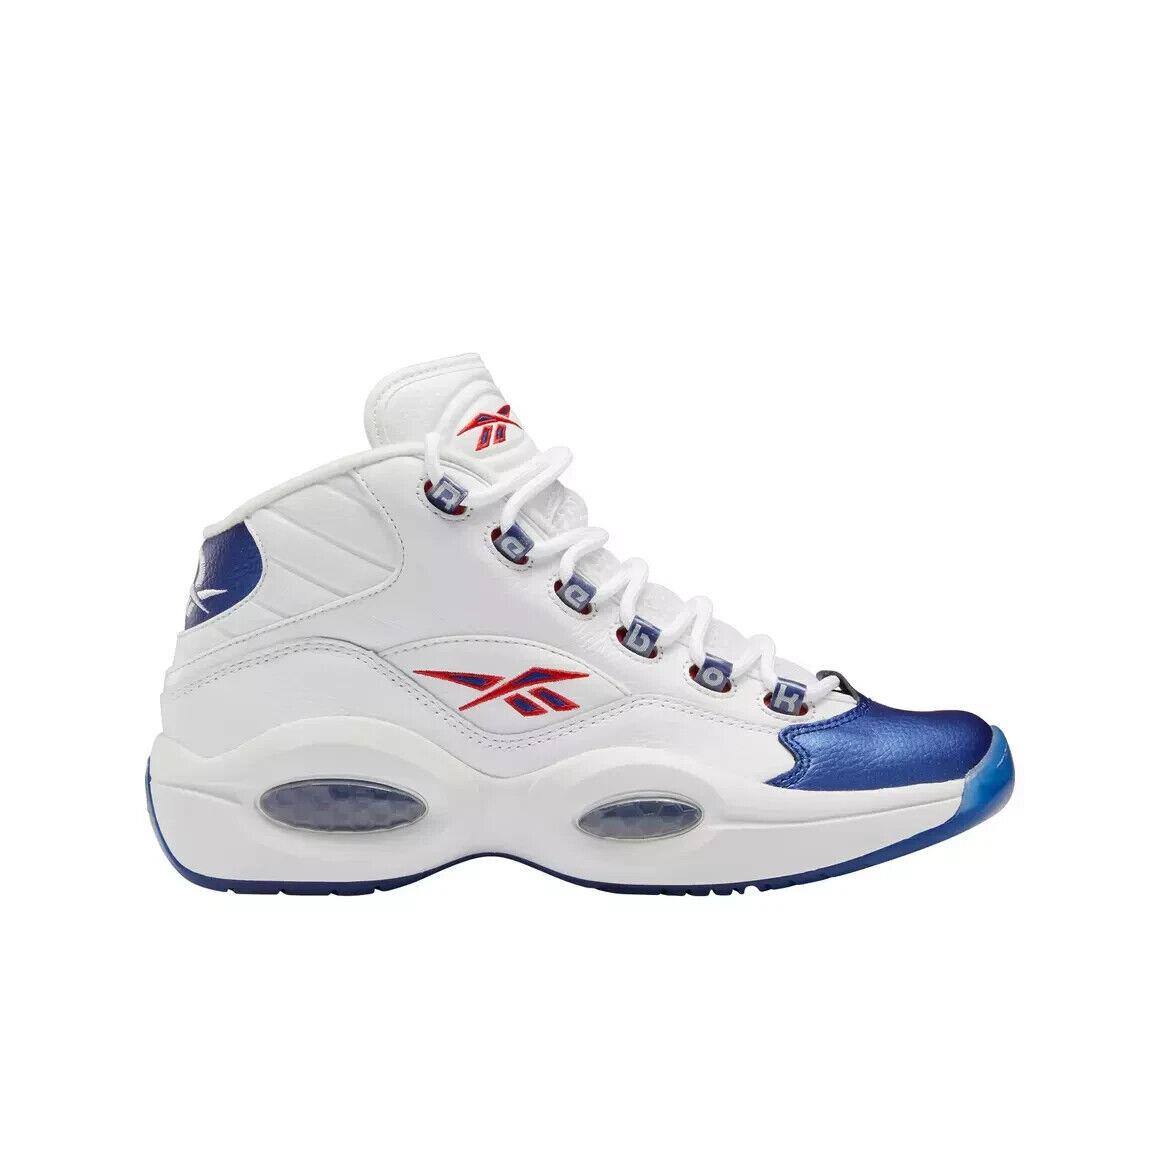 Mens Reebok Question Mid Basketball Shoes Size 7 White Blue GX0227 Iverson